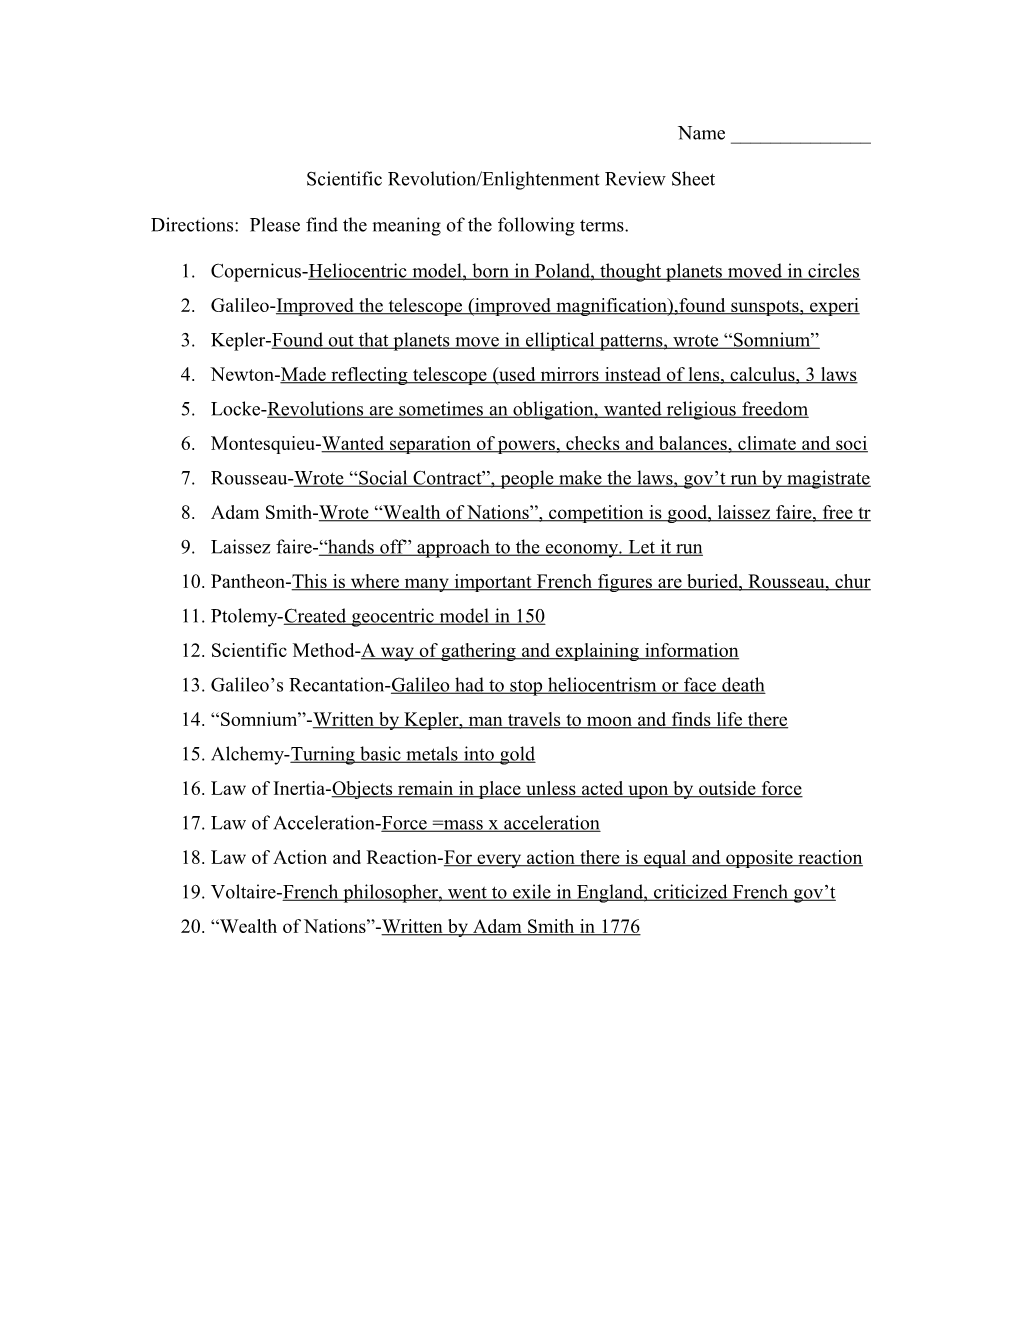 Scientific Revolution/Enlightenment Review Sheet